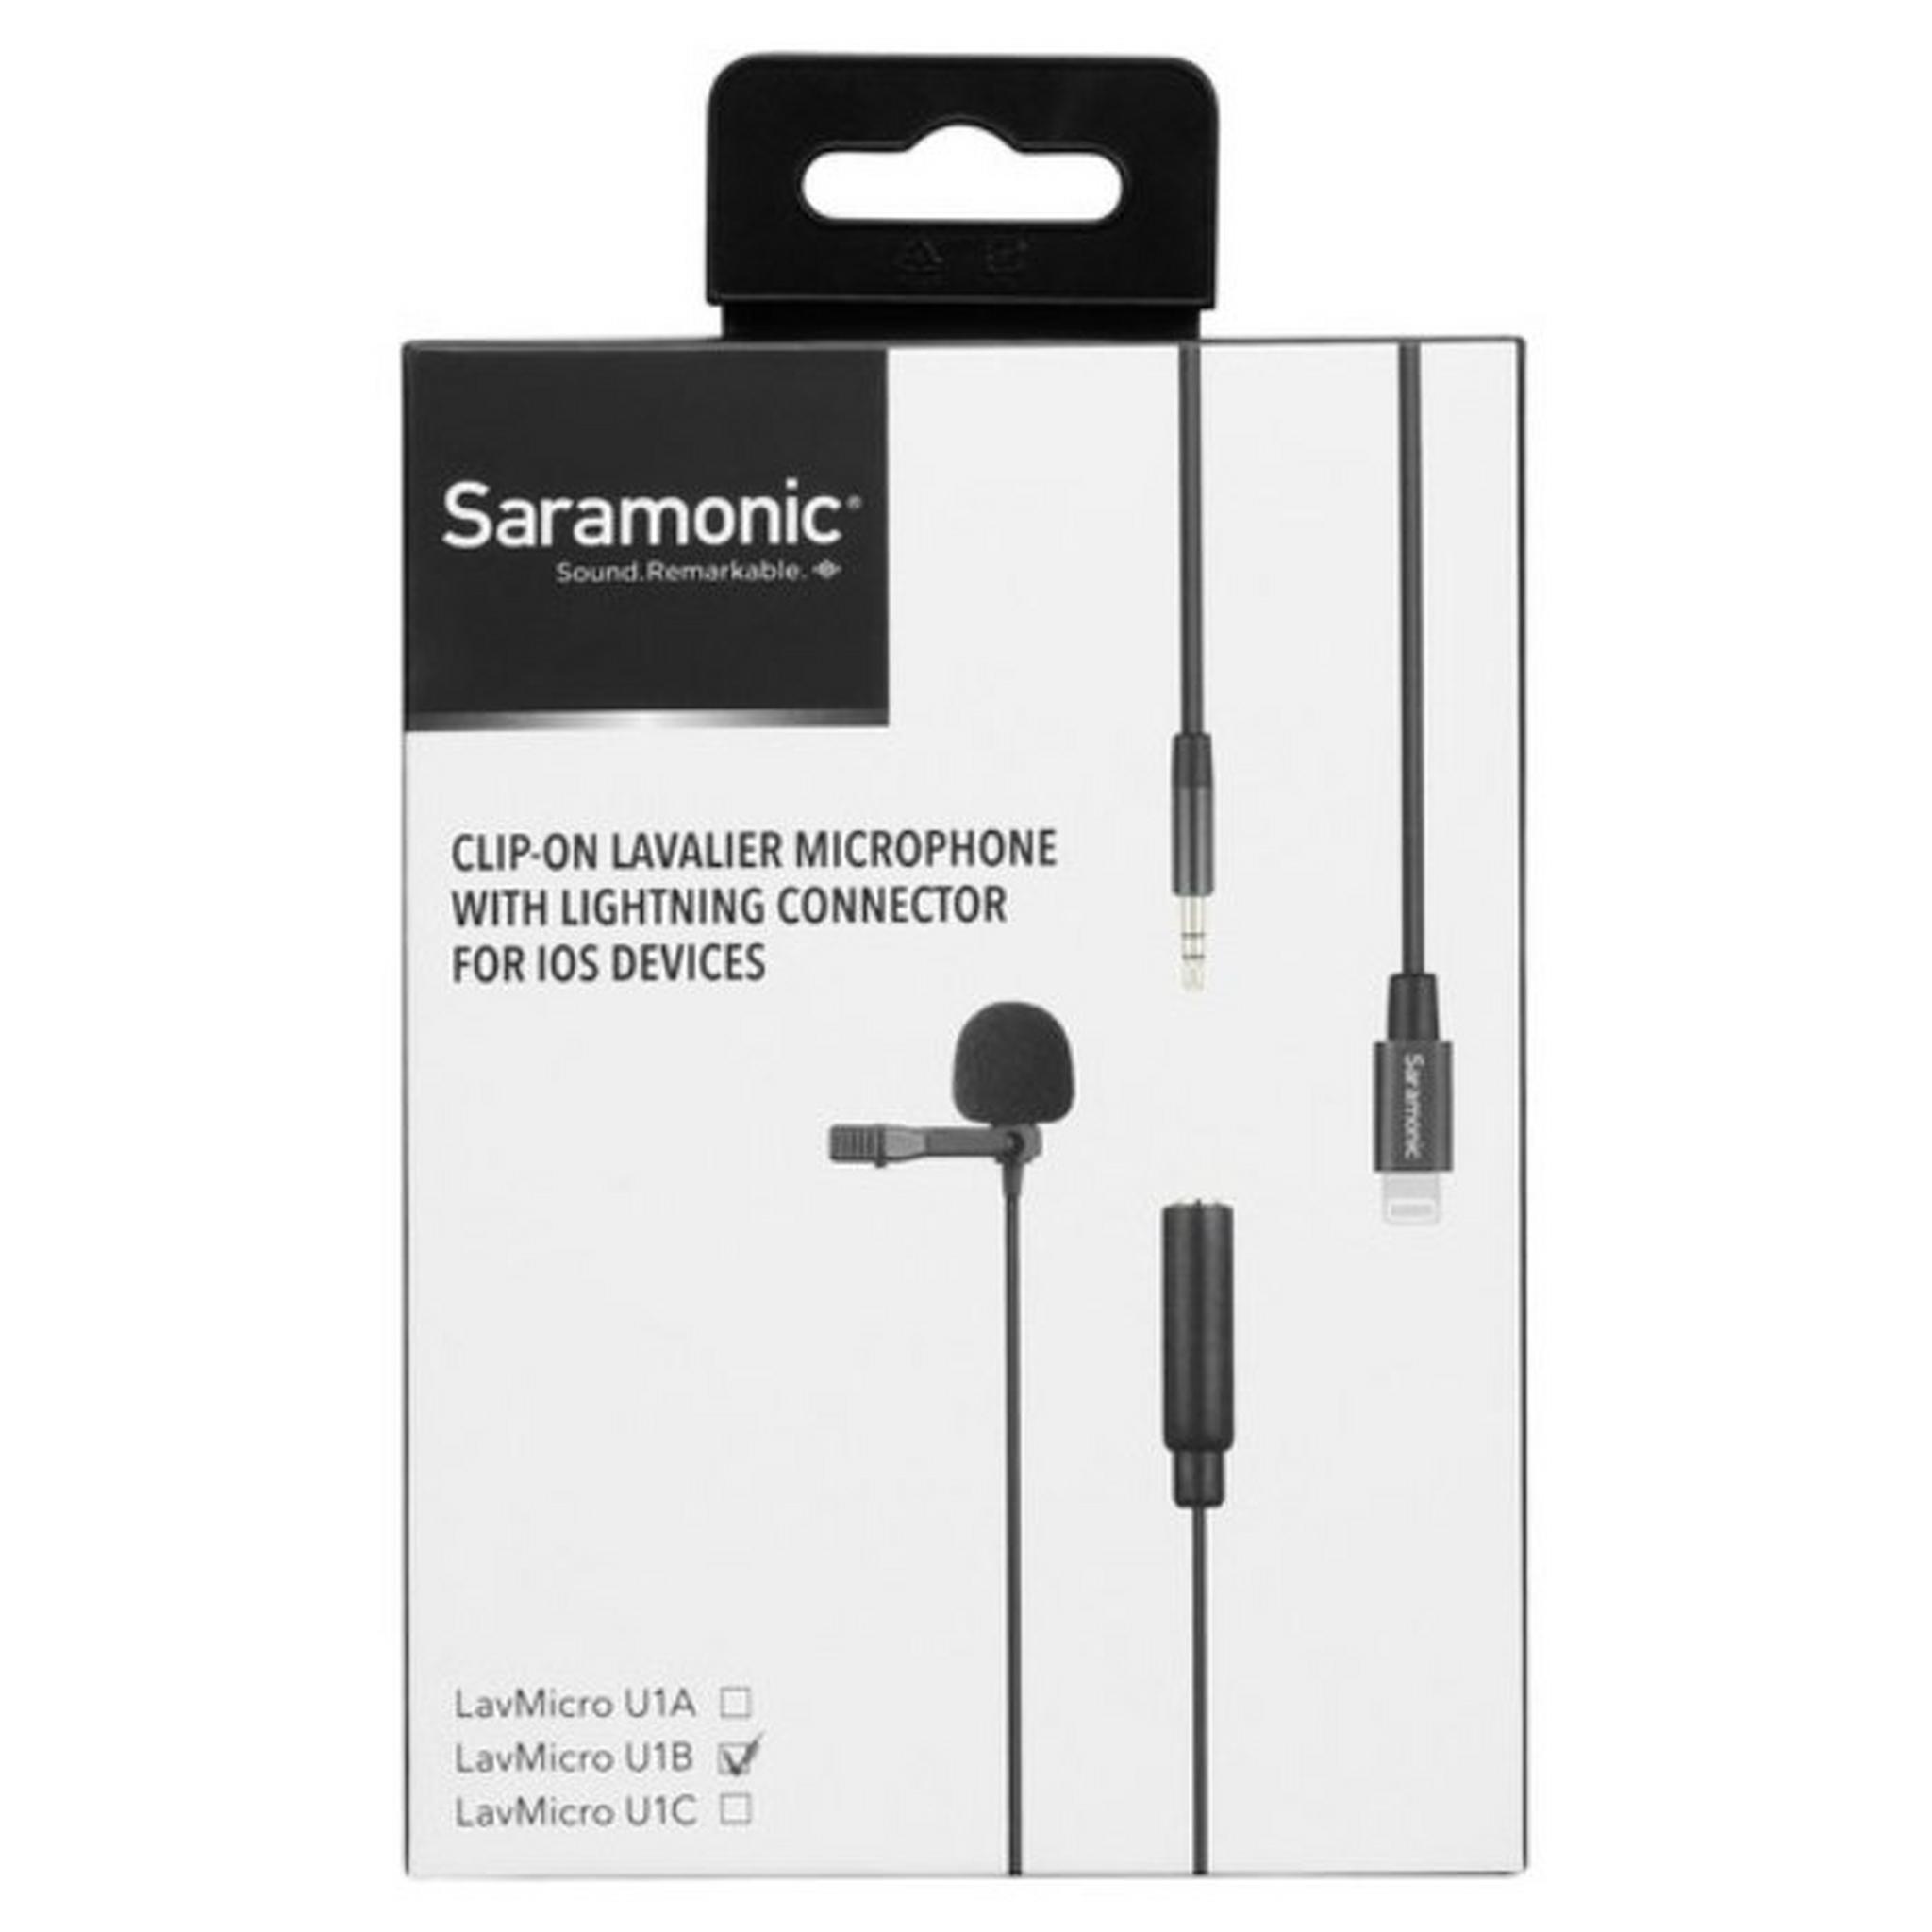 Saramonic LavMicro U1B Lightning Connector Microphone